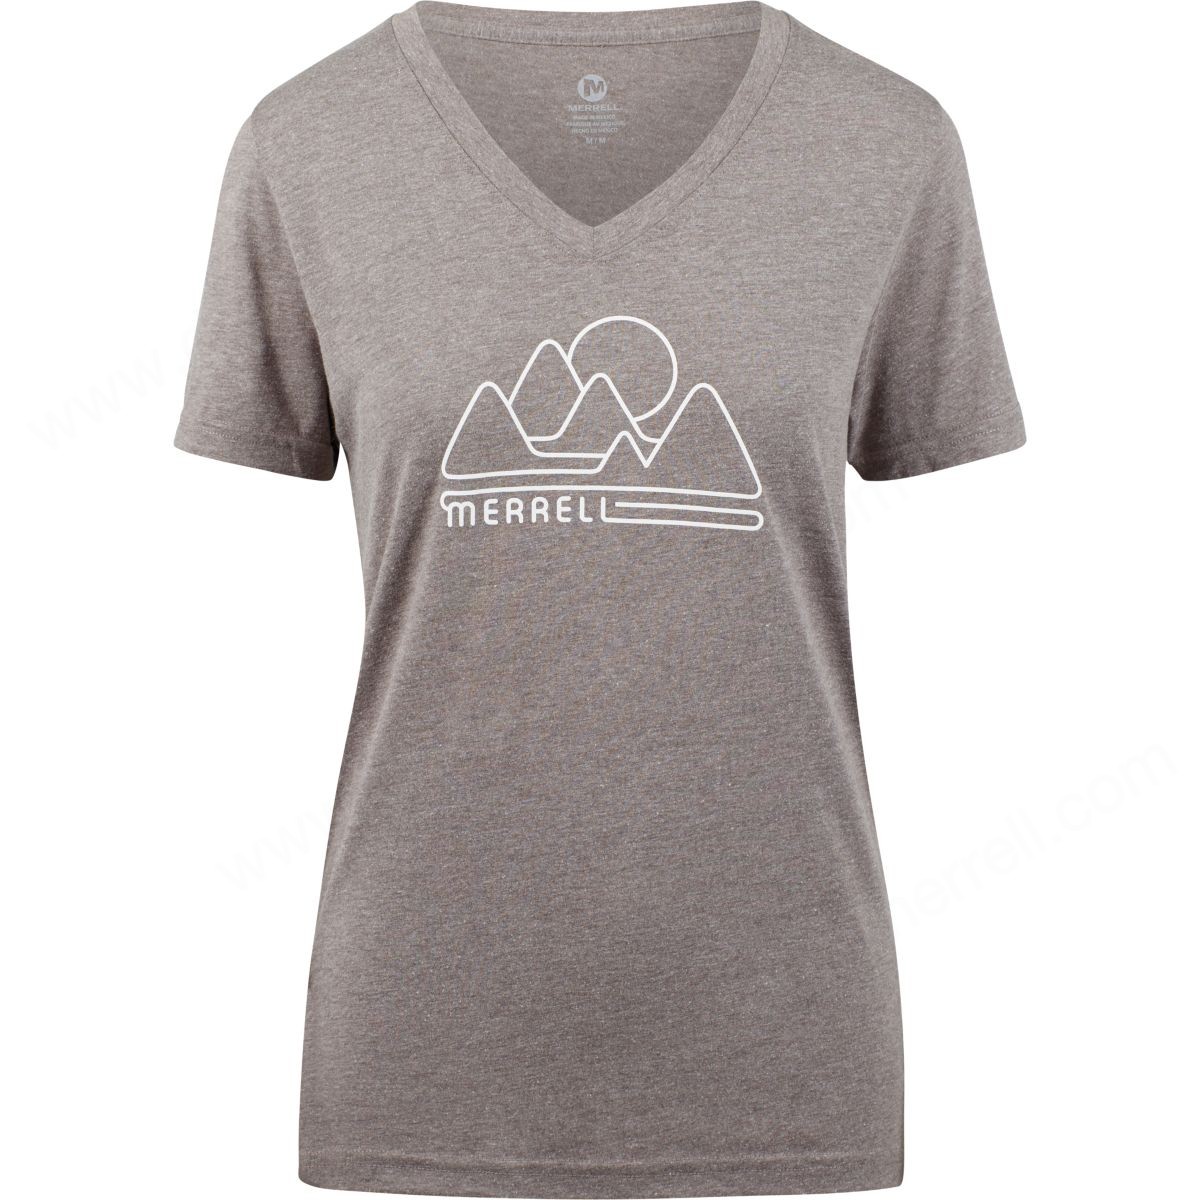 Merrell Womens's Echo Tshirt Grey - -0